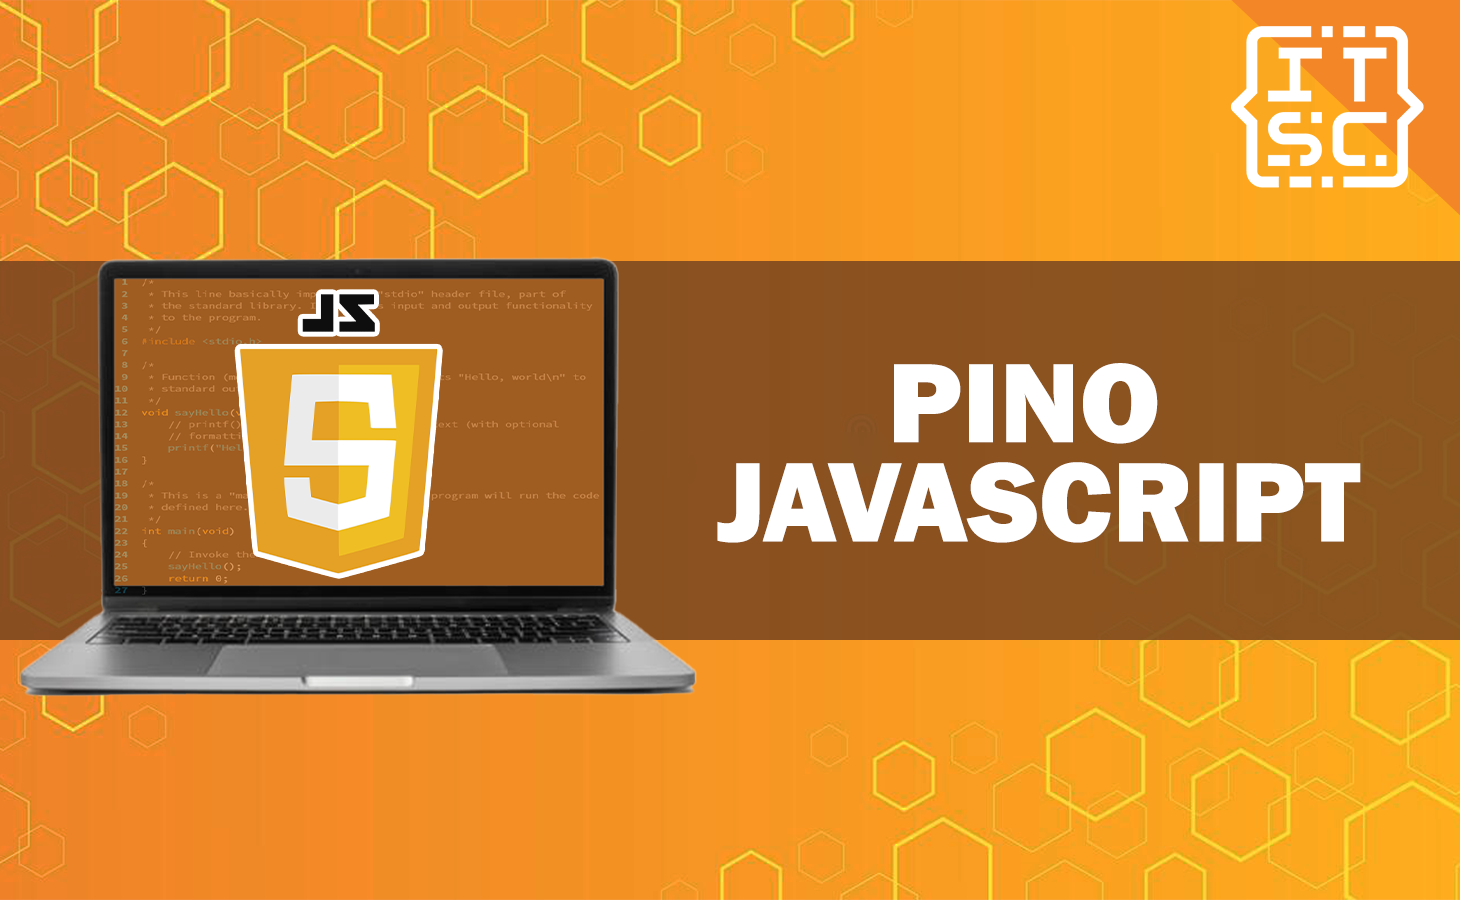 Pino JavaScript